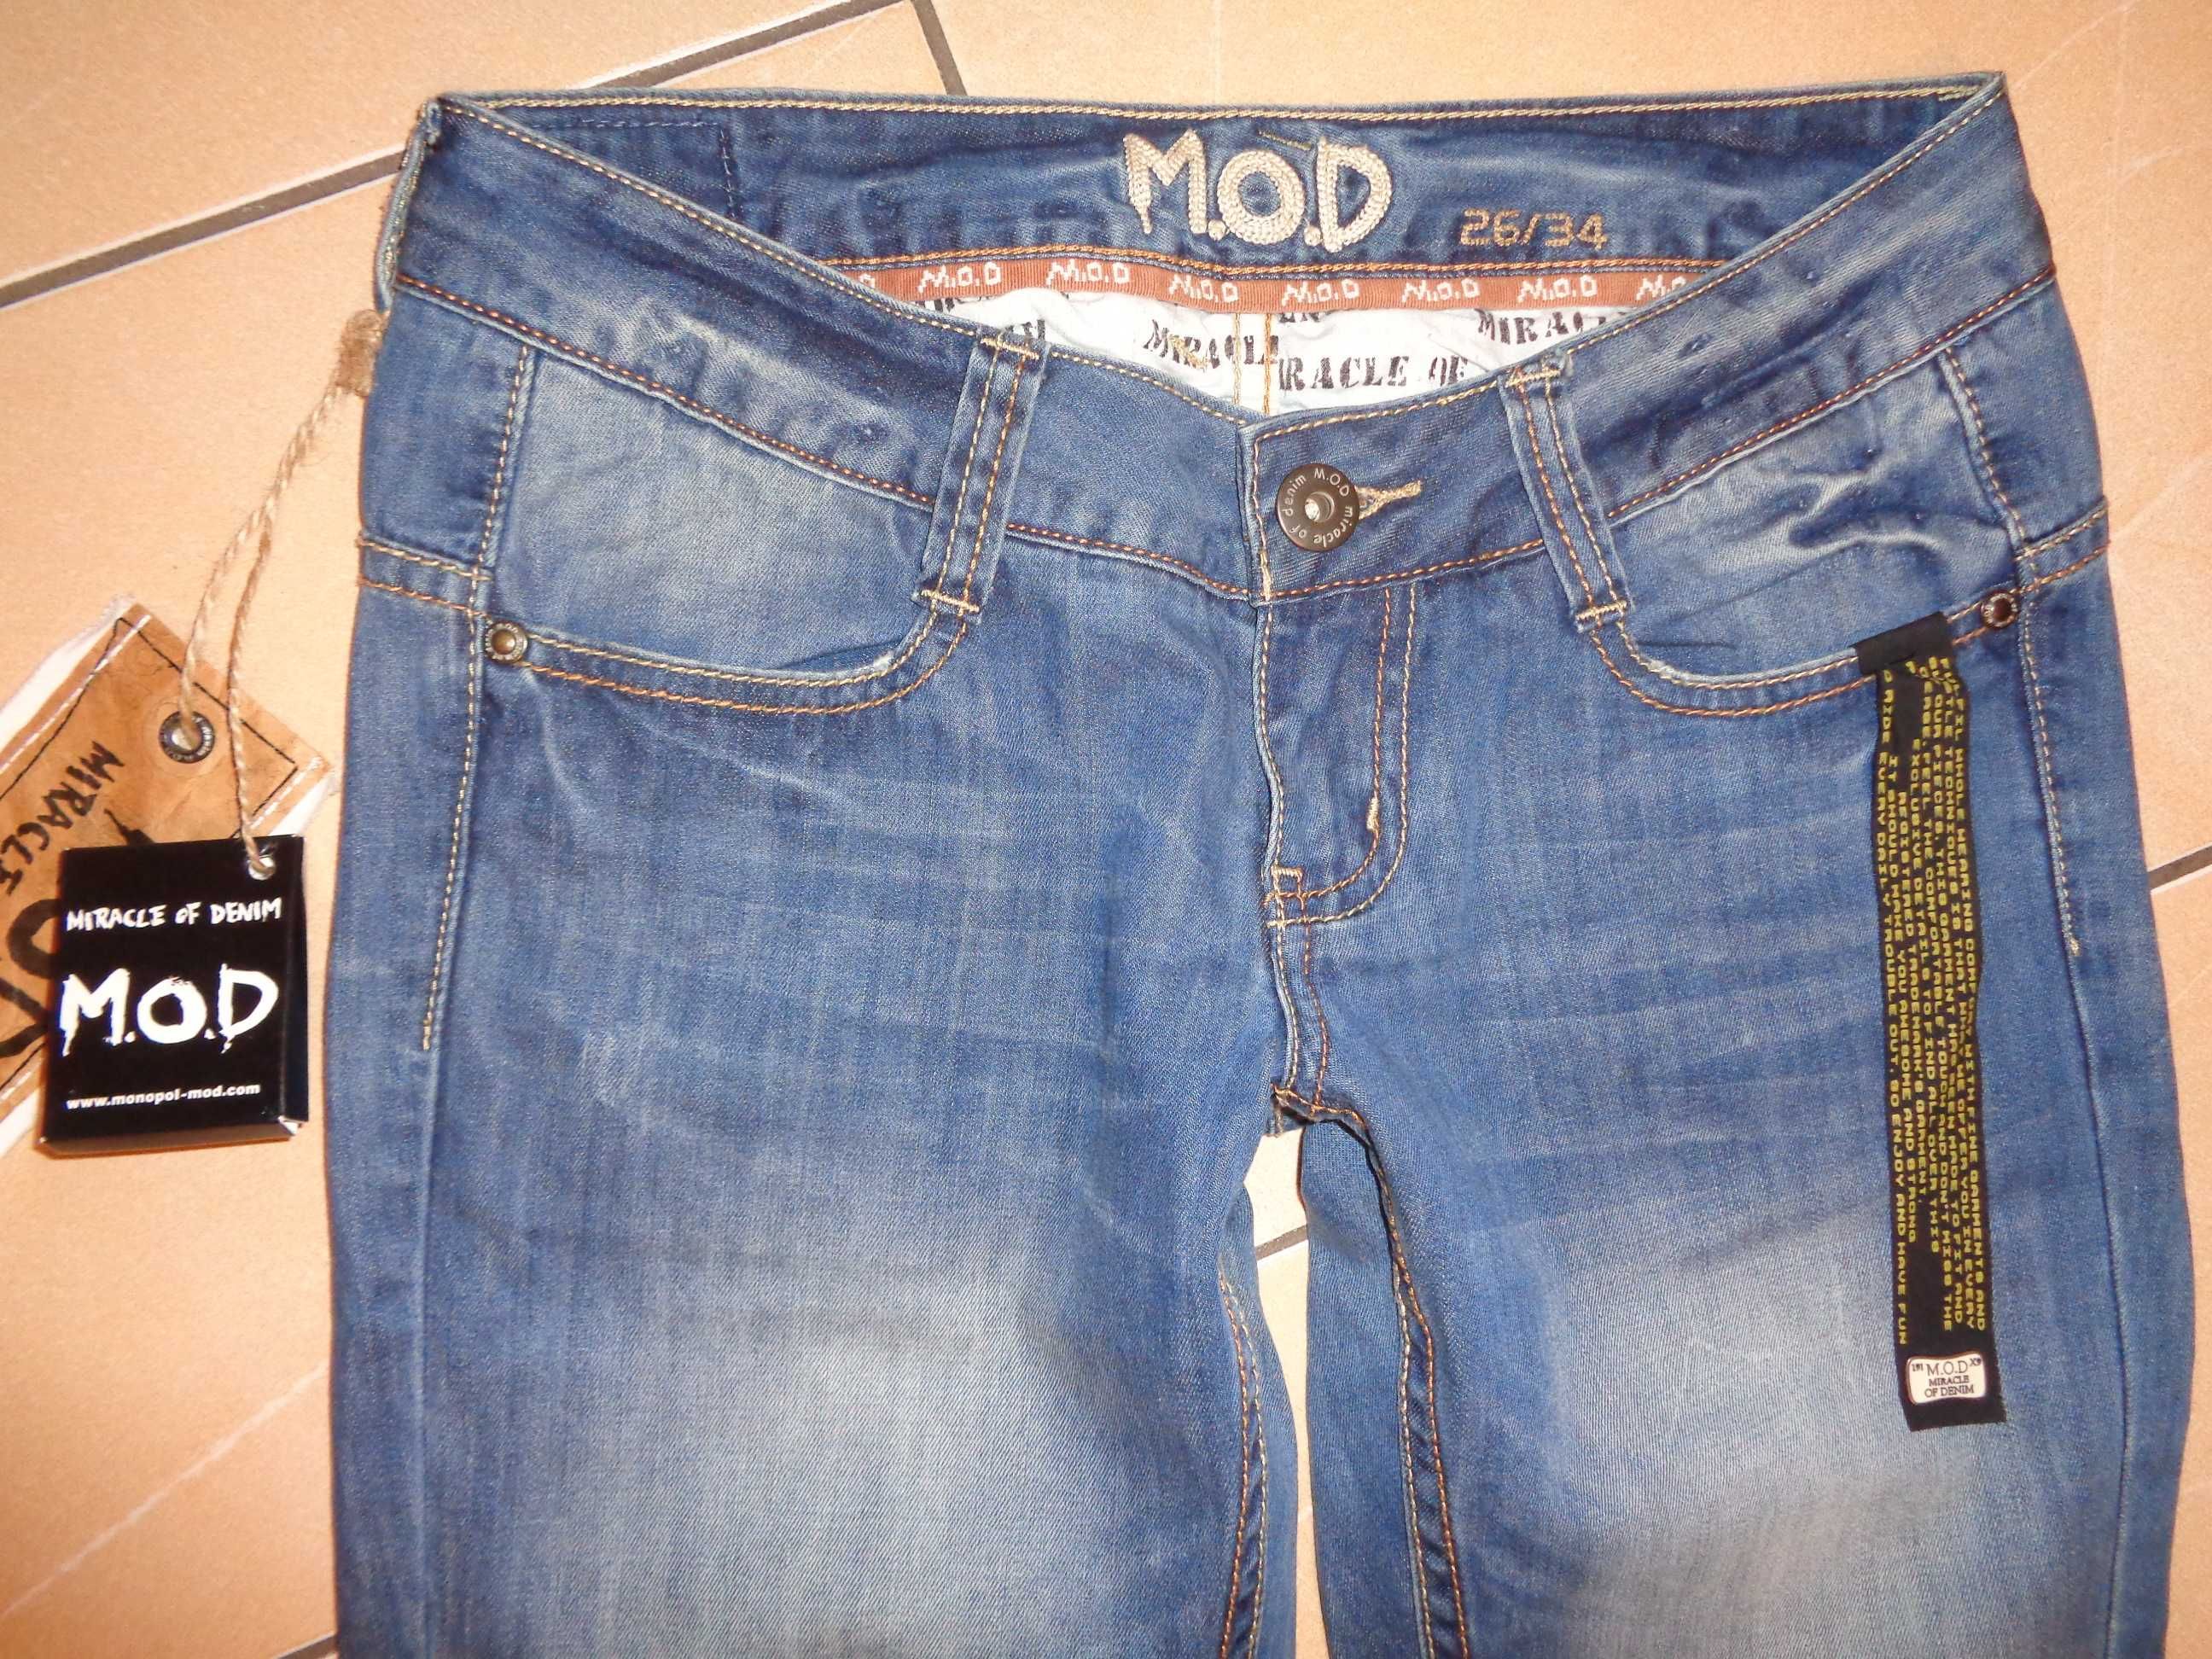 M.O.D. Miracle of DENIM oryg. niebieskie spodnie jeansowe NOWE r 26/34